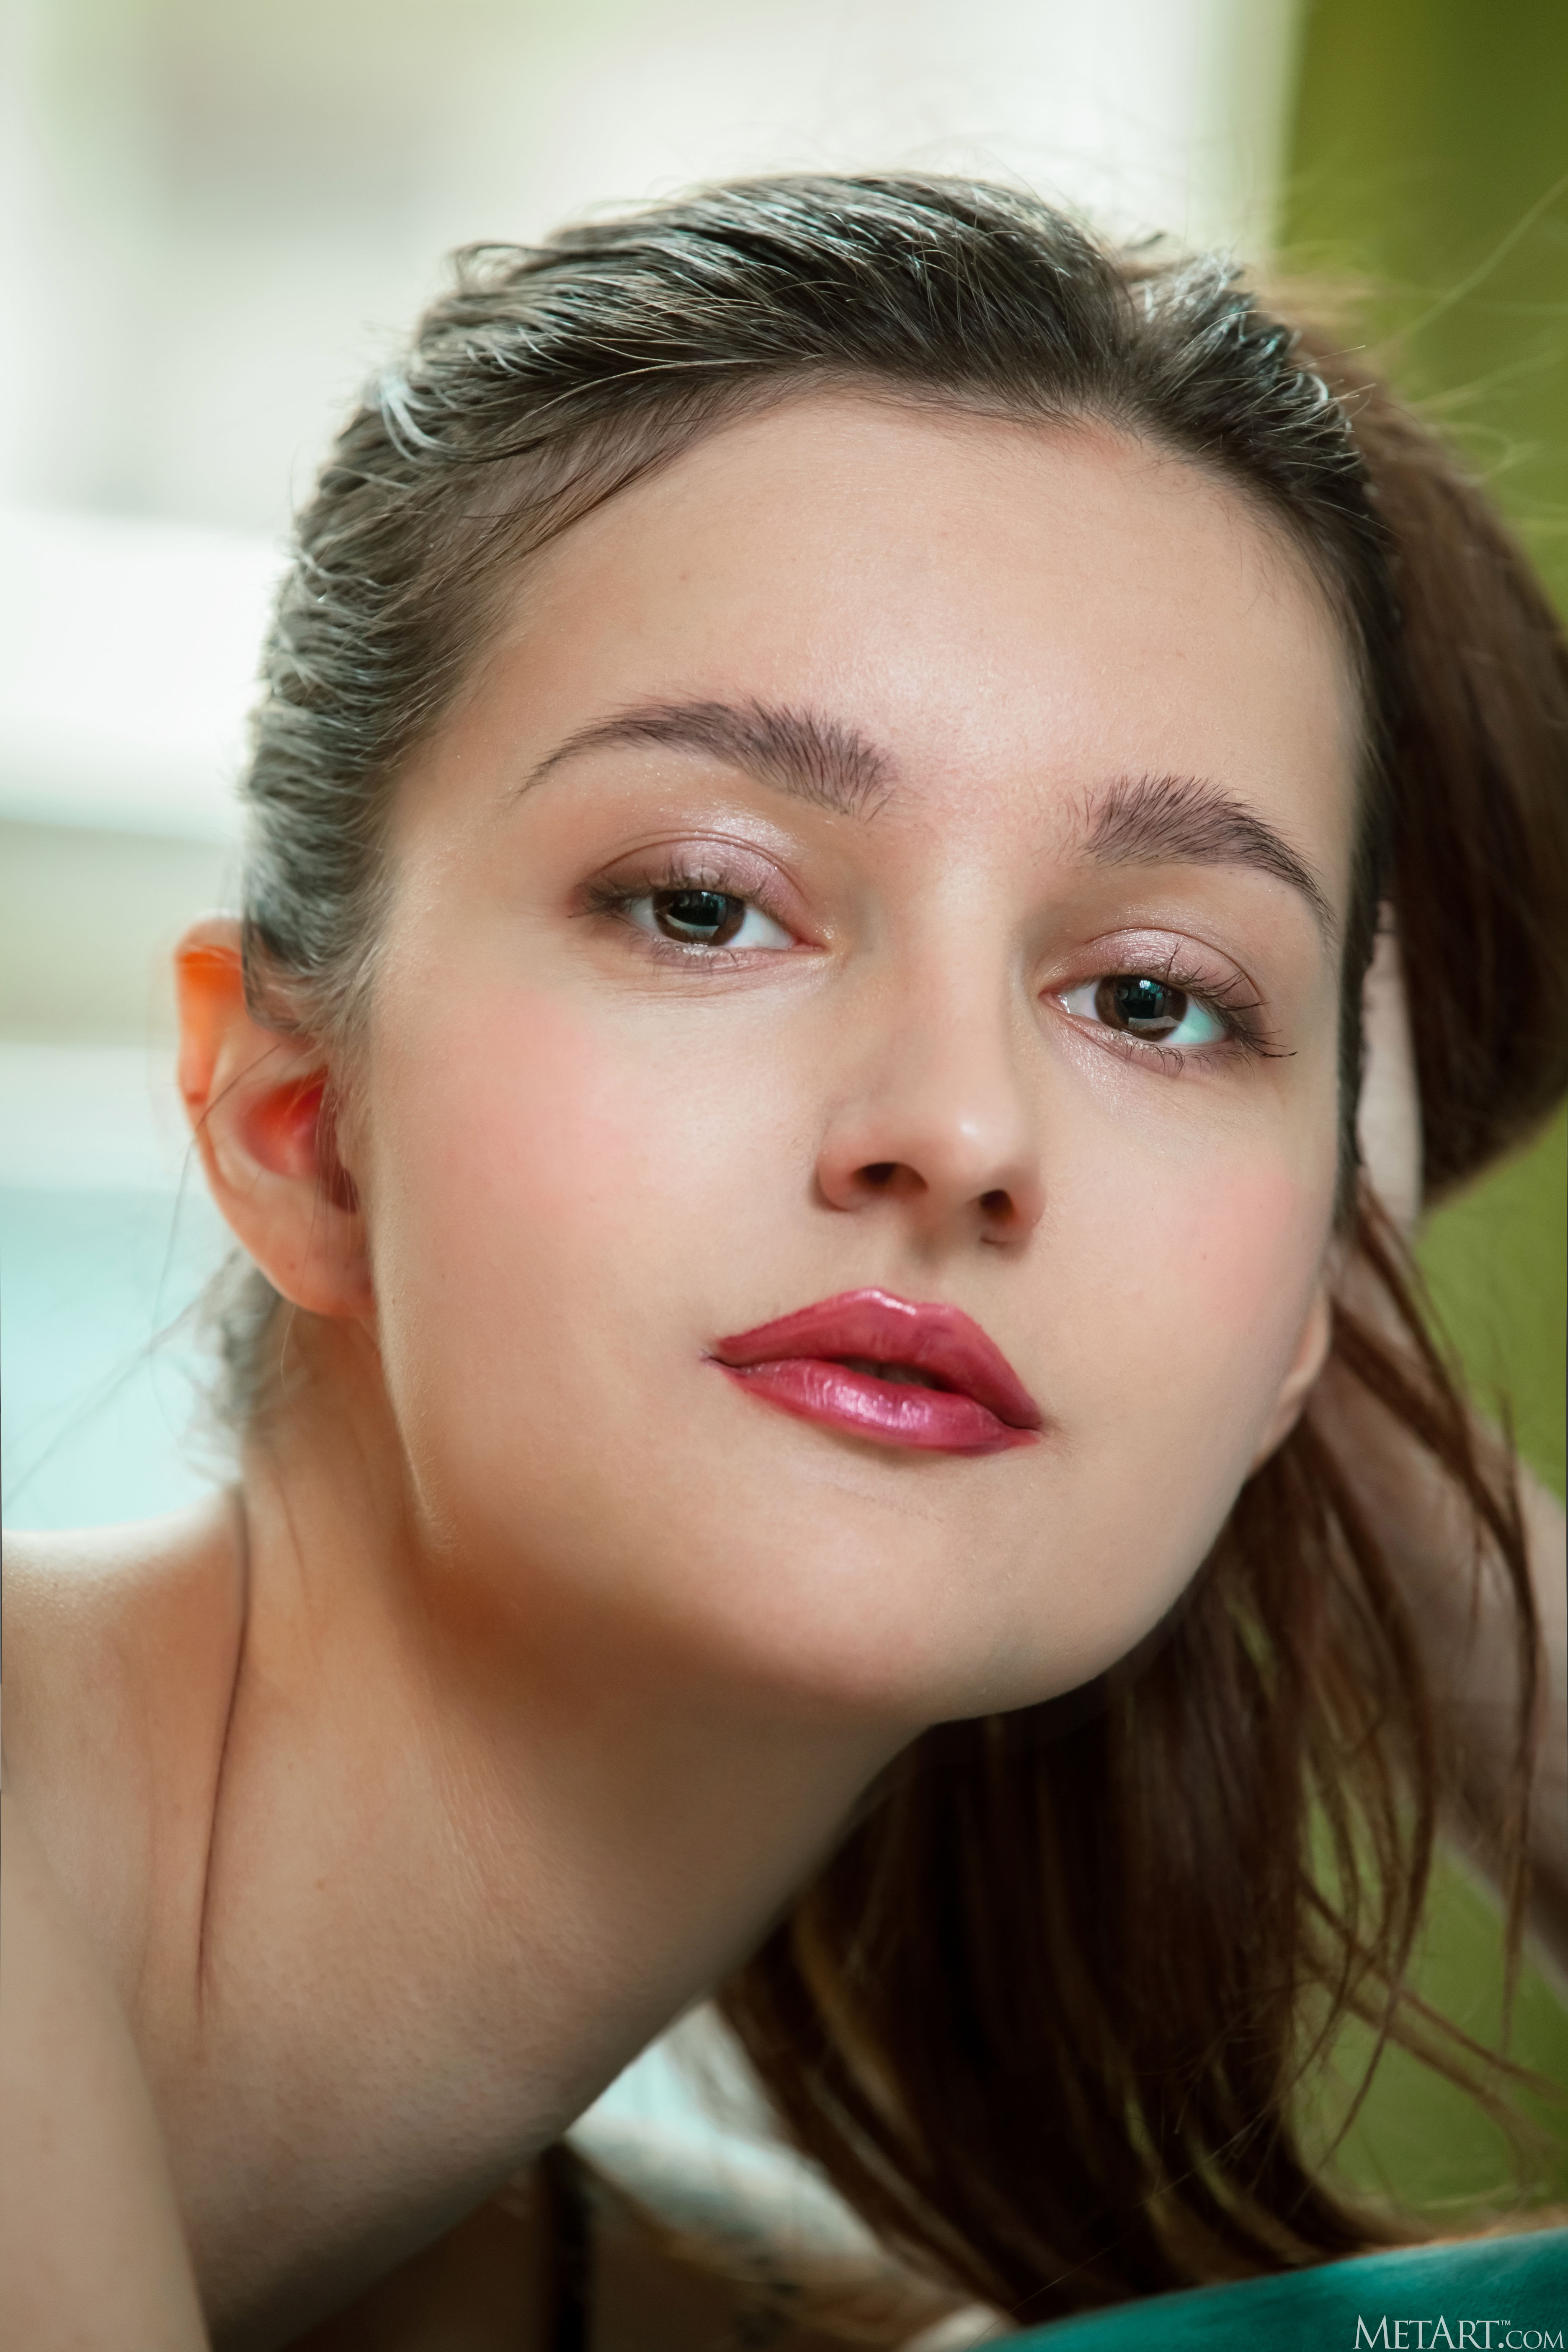 People 3744x5616 model women Adeline (MetArt) face brunette MetArt portrait display closeup watermarked